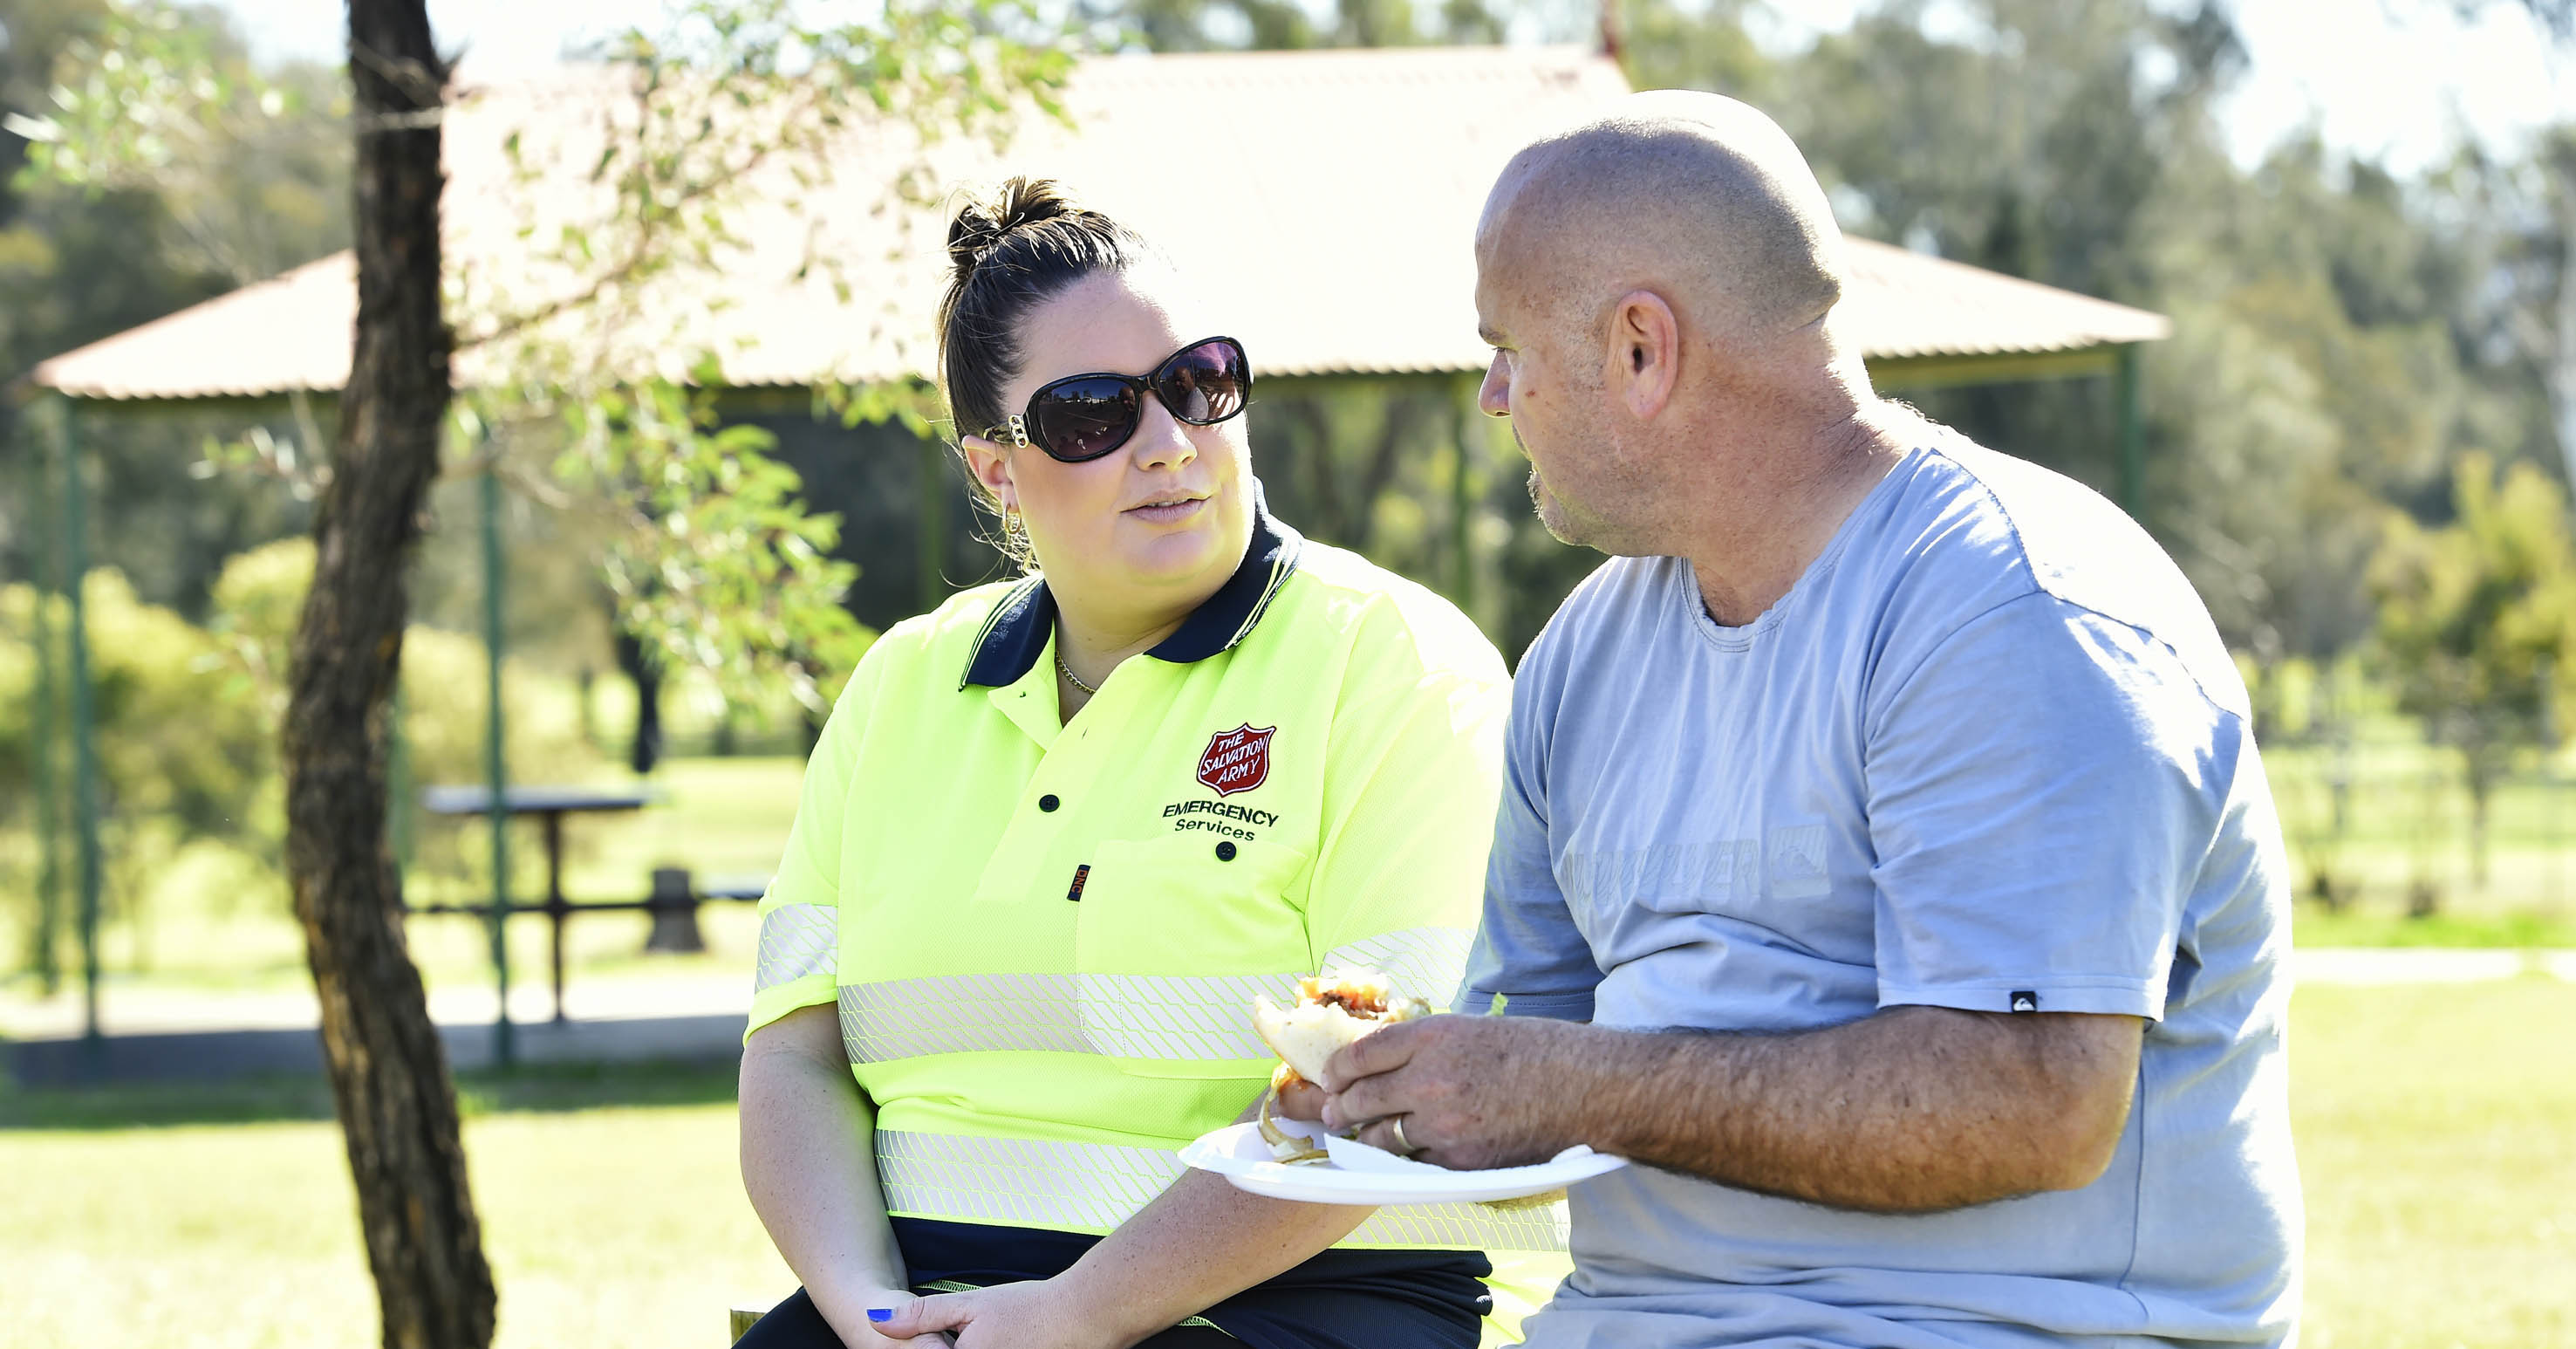 Salvos emergency services volunteer talking to bald man